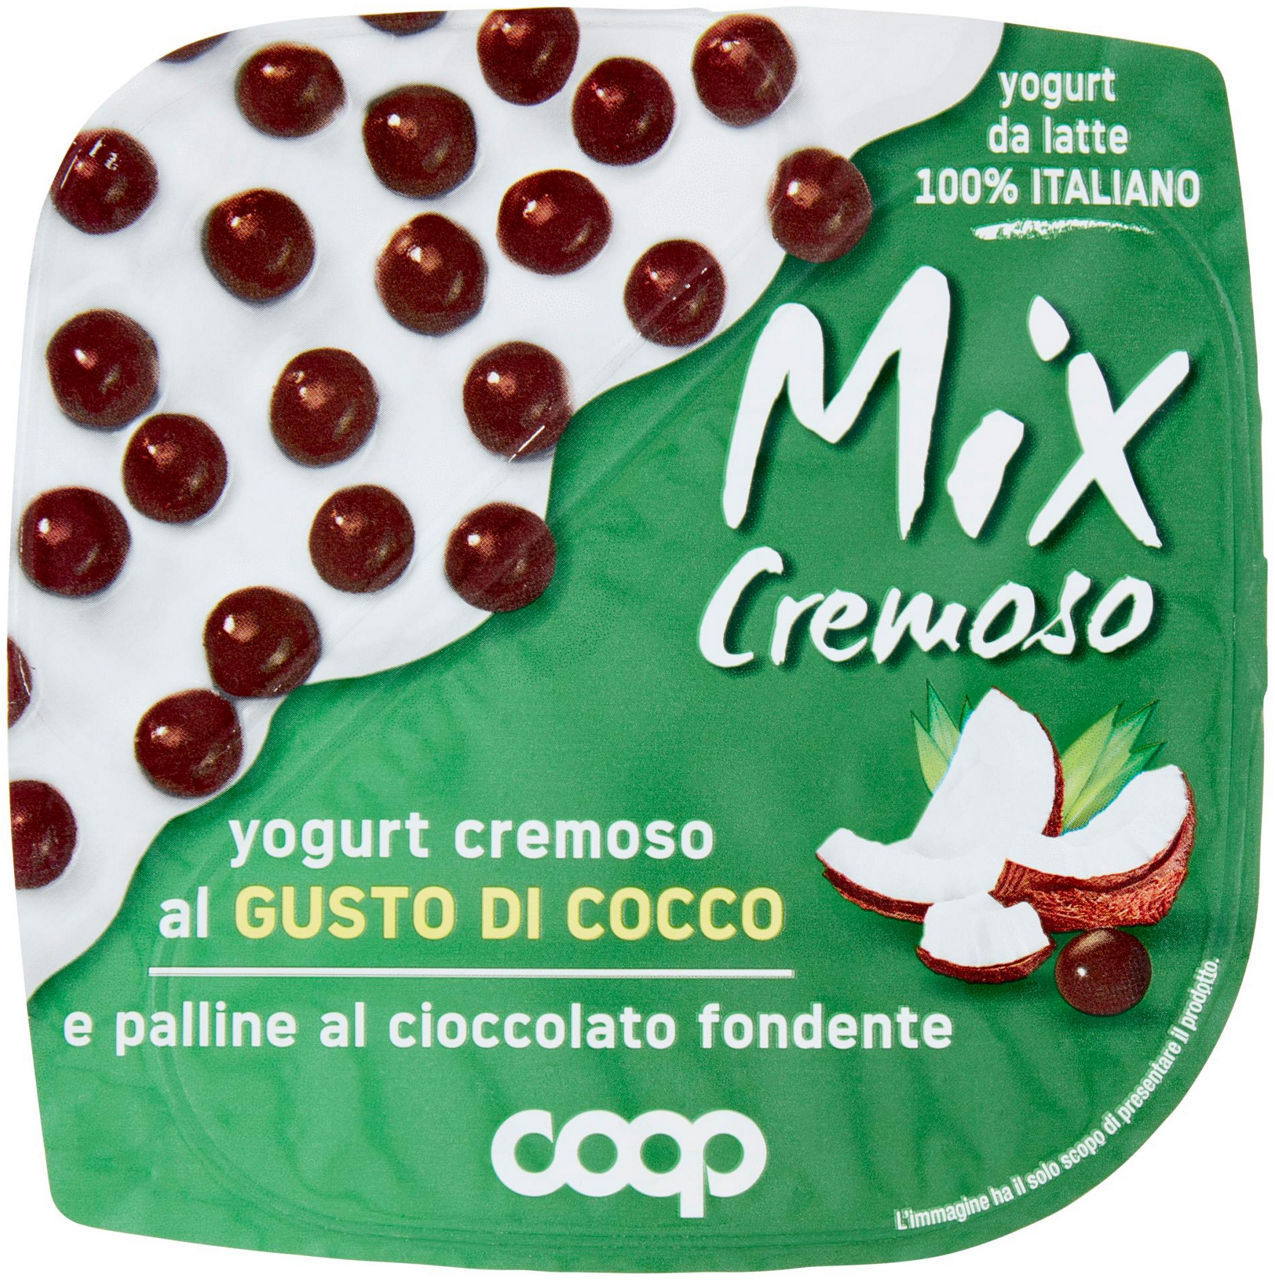 Mix cremoso coop yogurt cocco + palline di cereali ricop.ciocc fond bicomp 150g